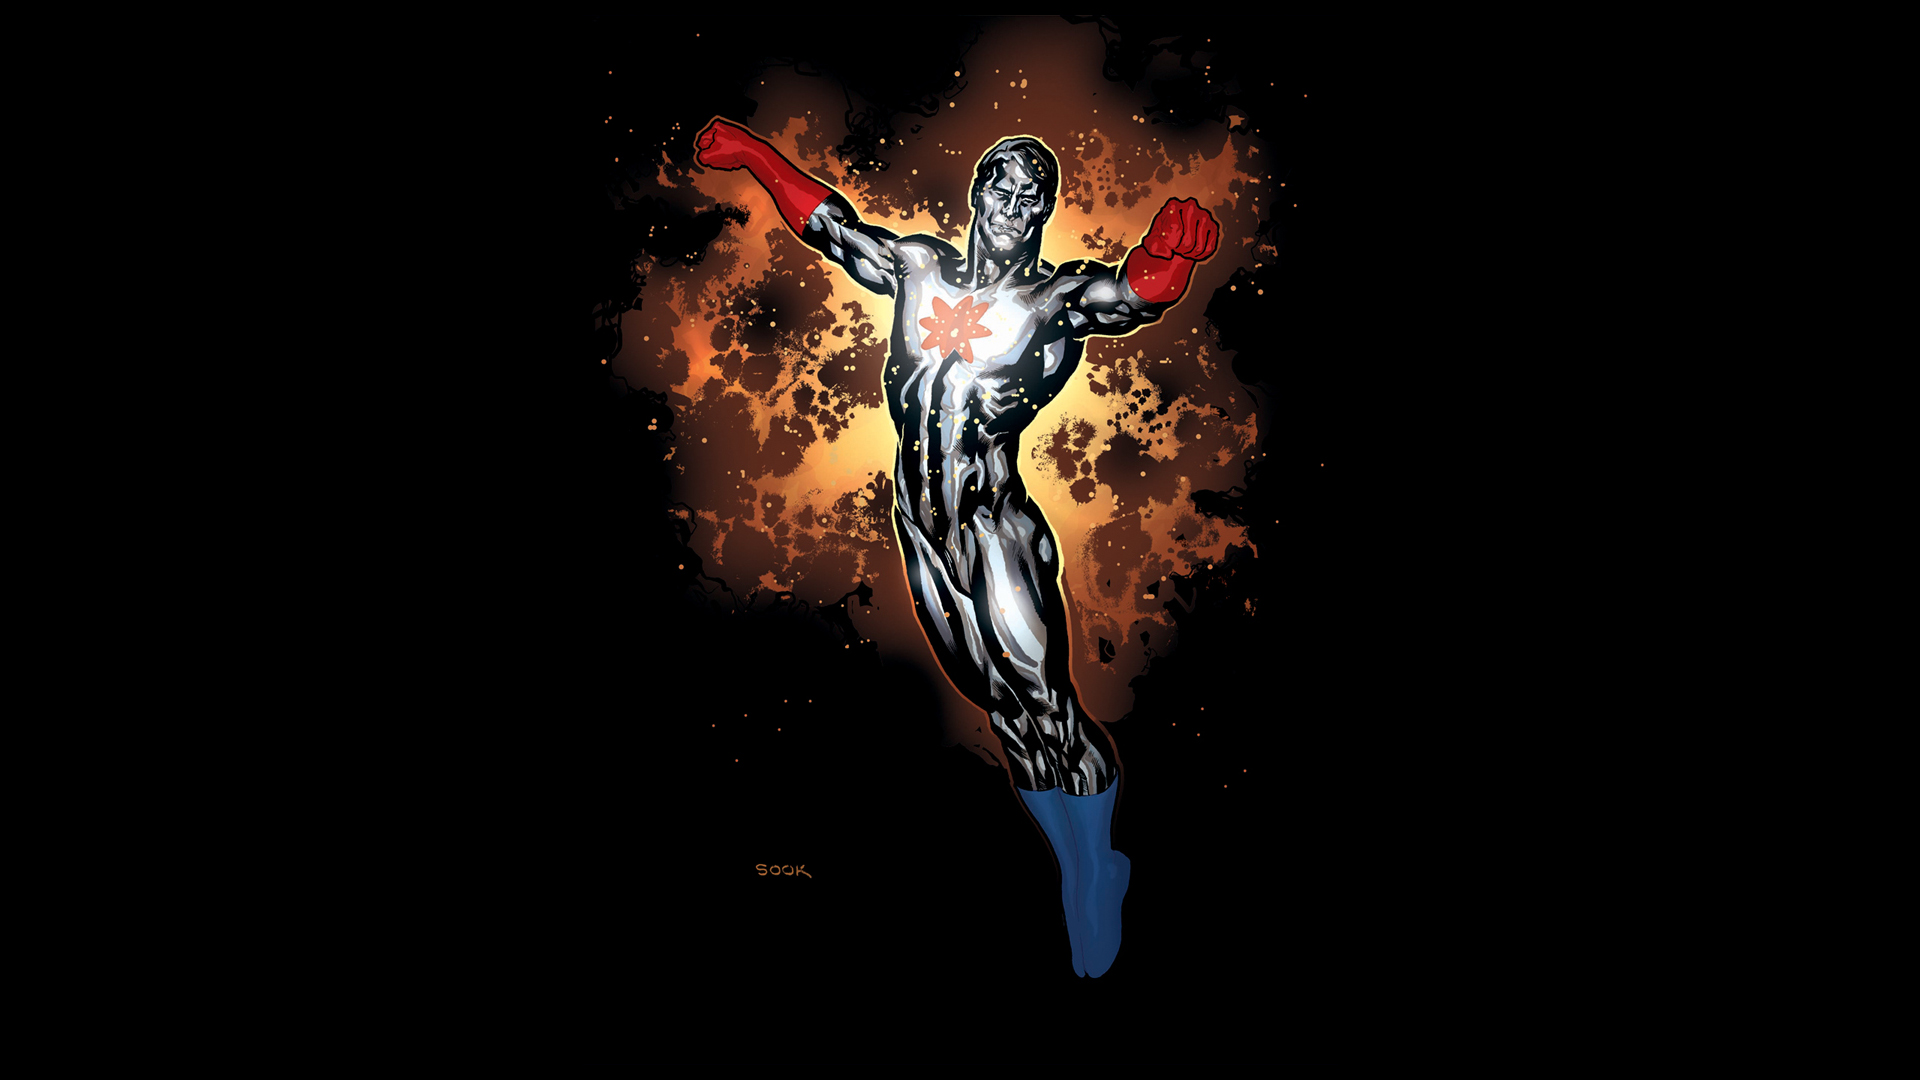 Comics Captain Atom HD Wallpaper | Background Image